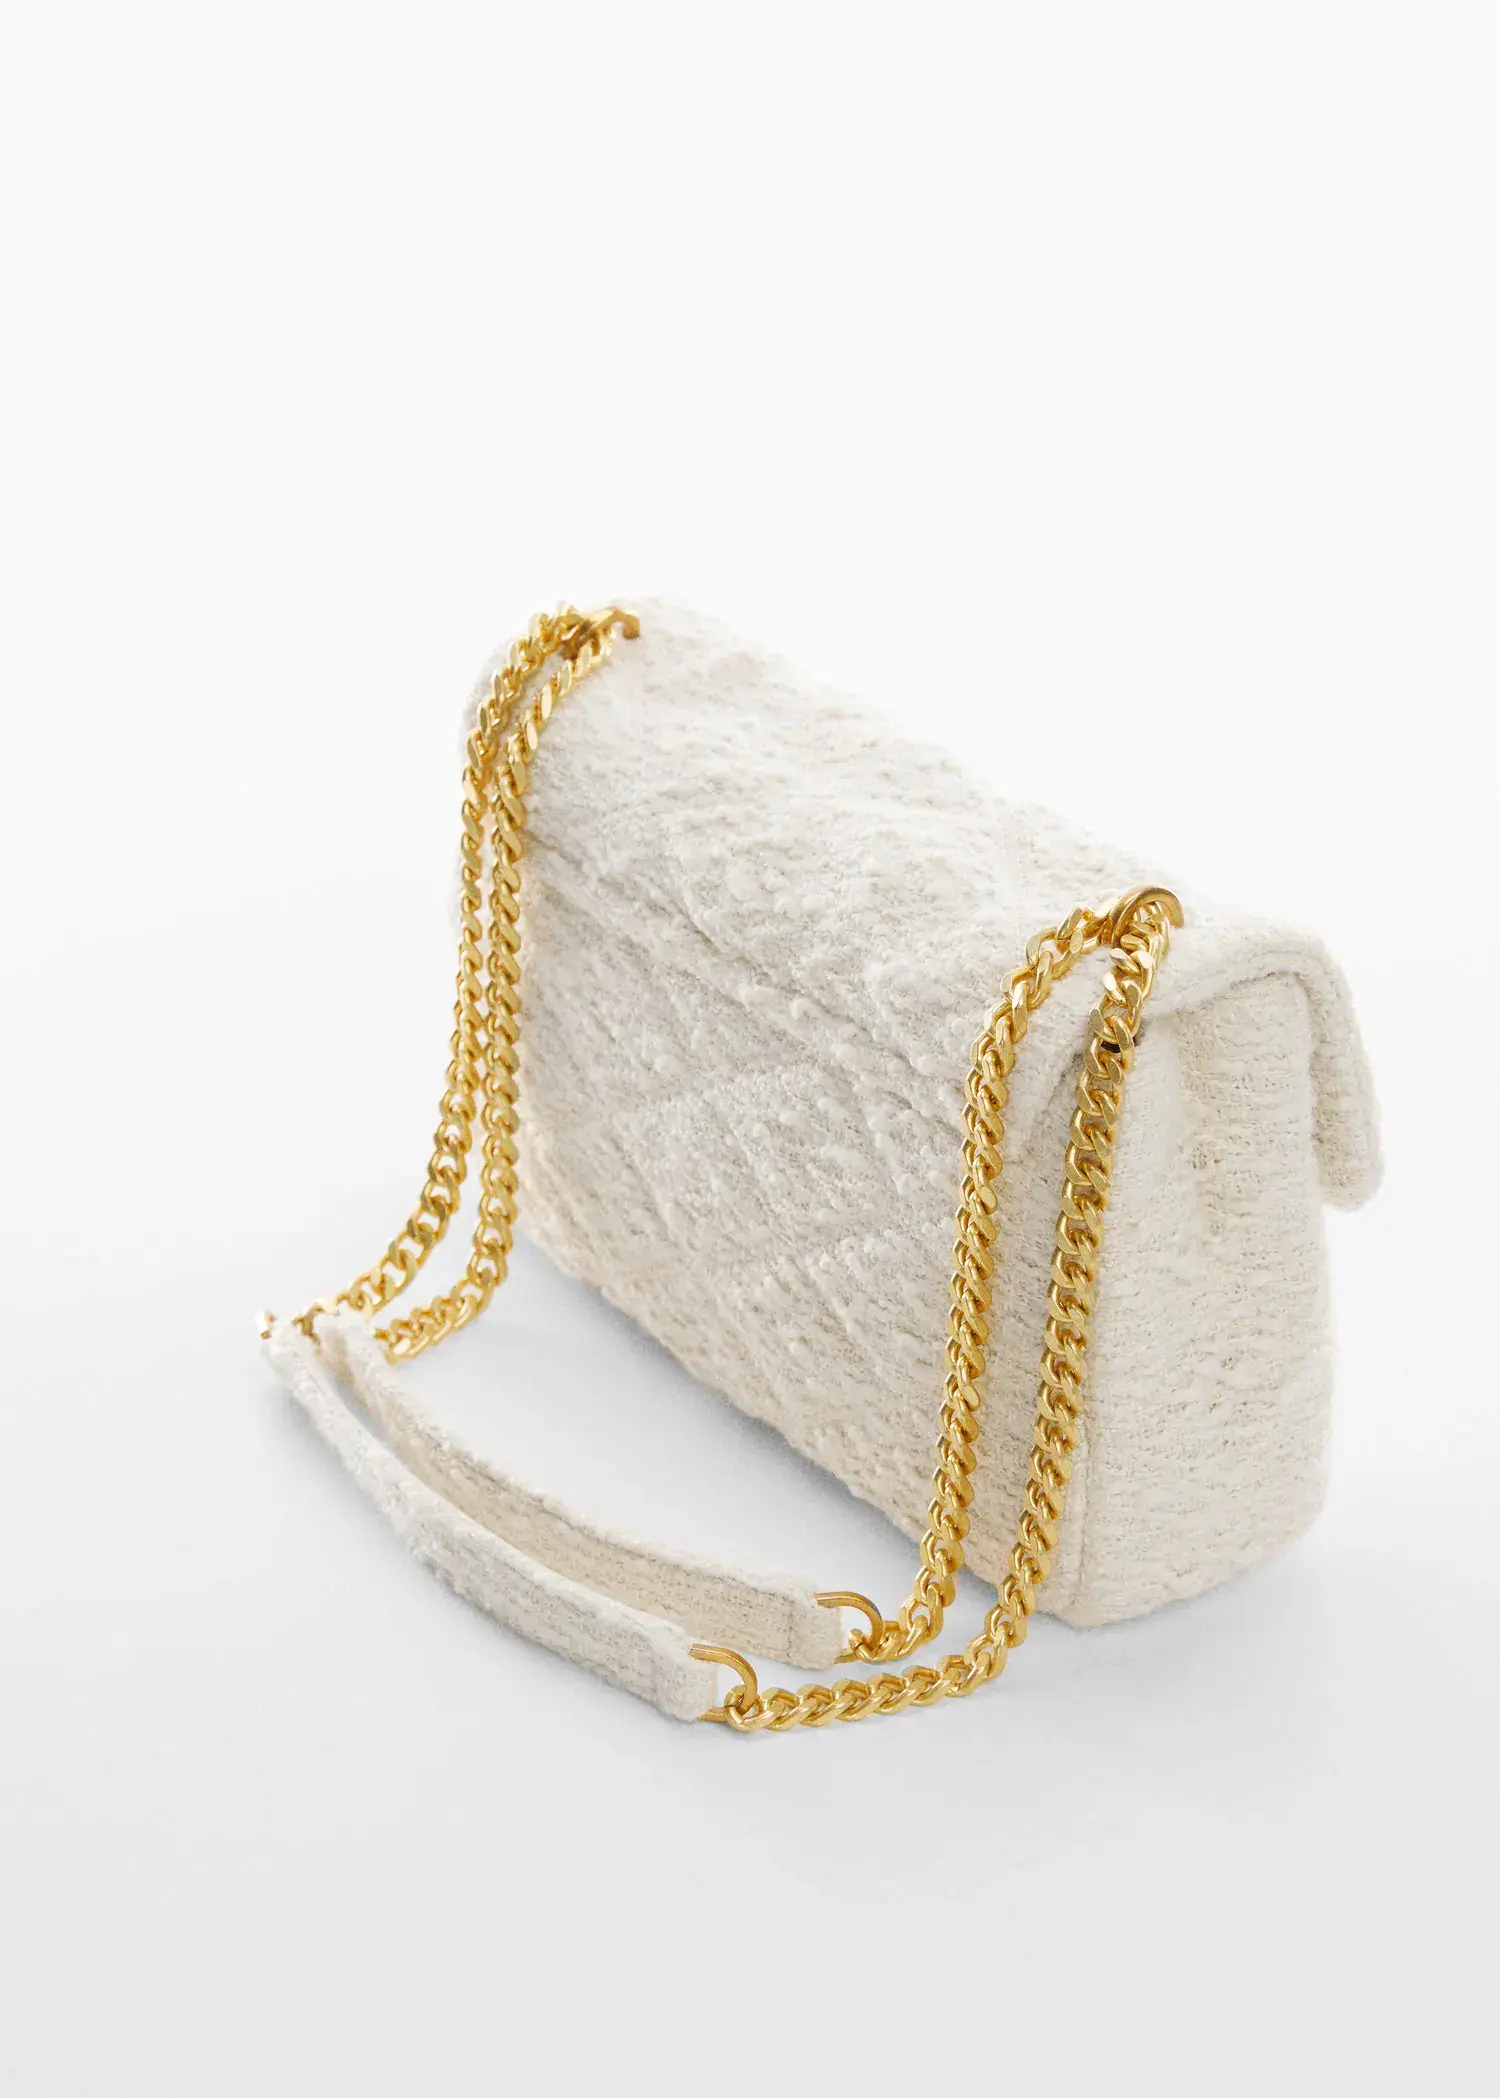 Mango Textured chain bag. a white purse with a gold chain handle. 